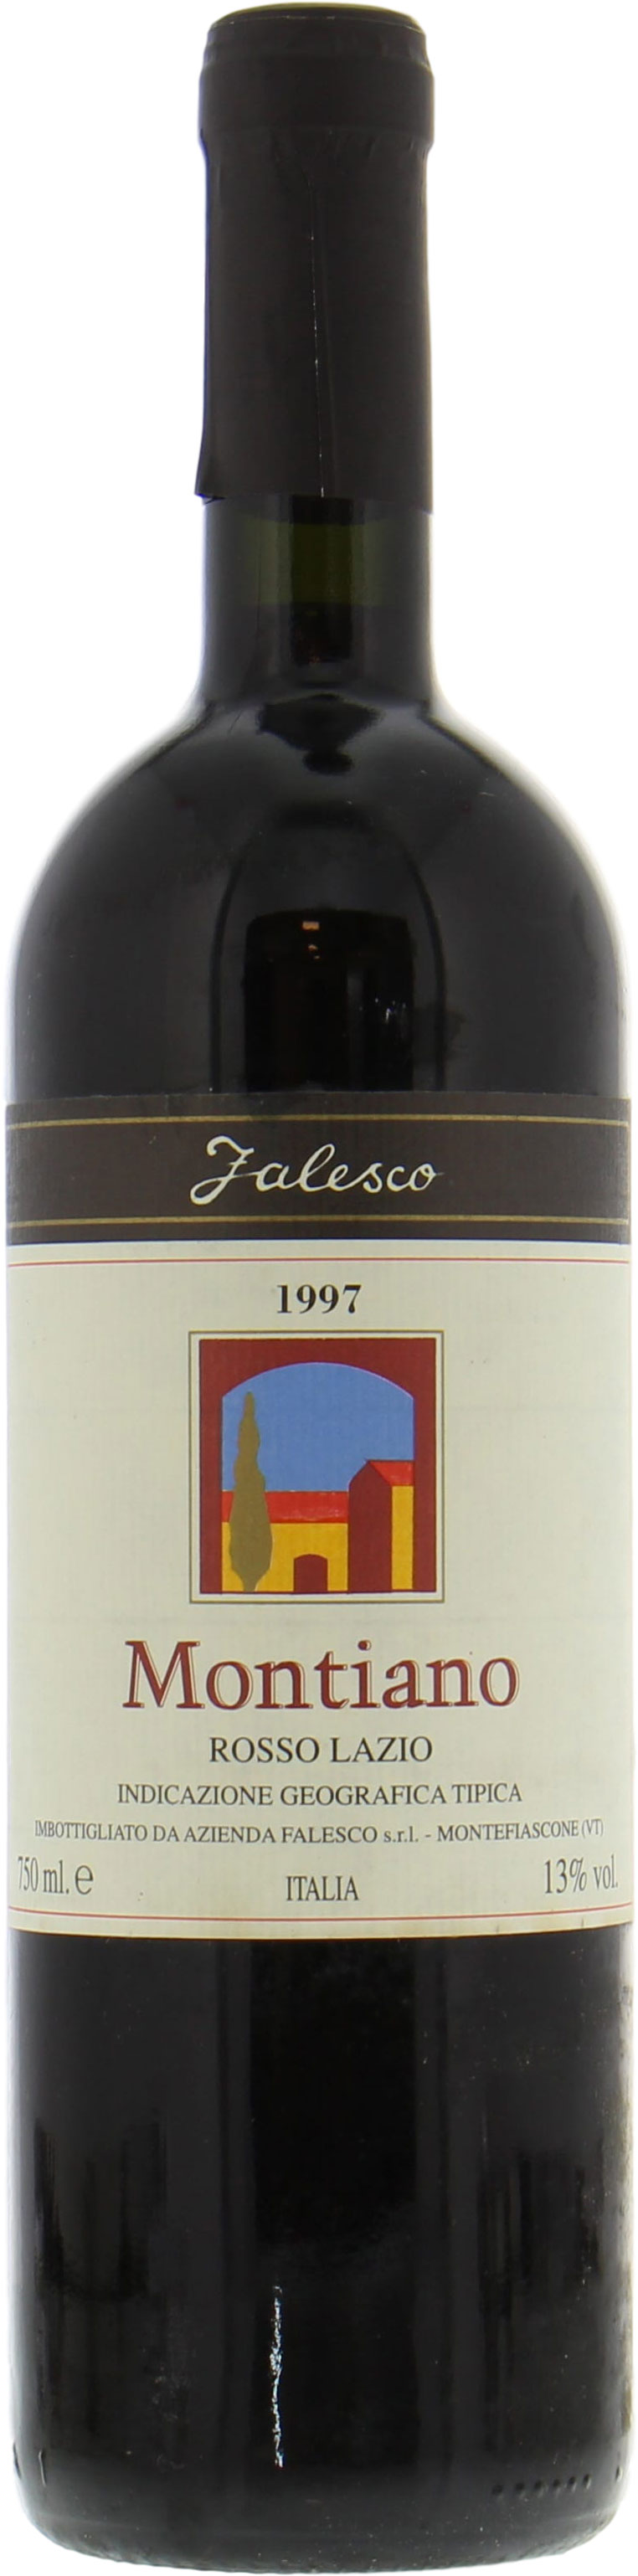 Falesco - Montiano 1997